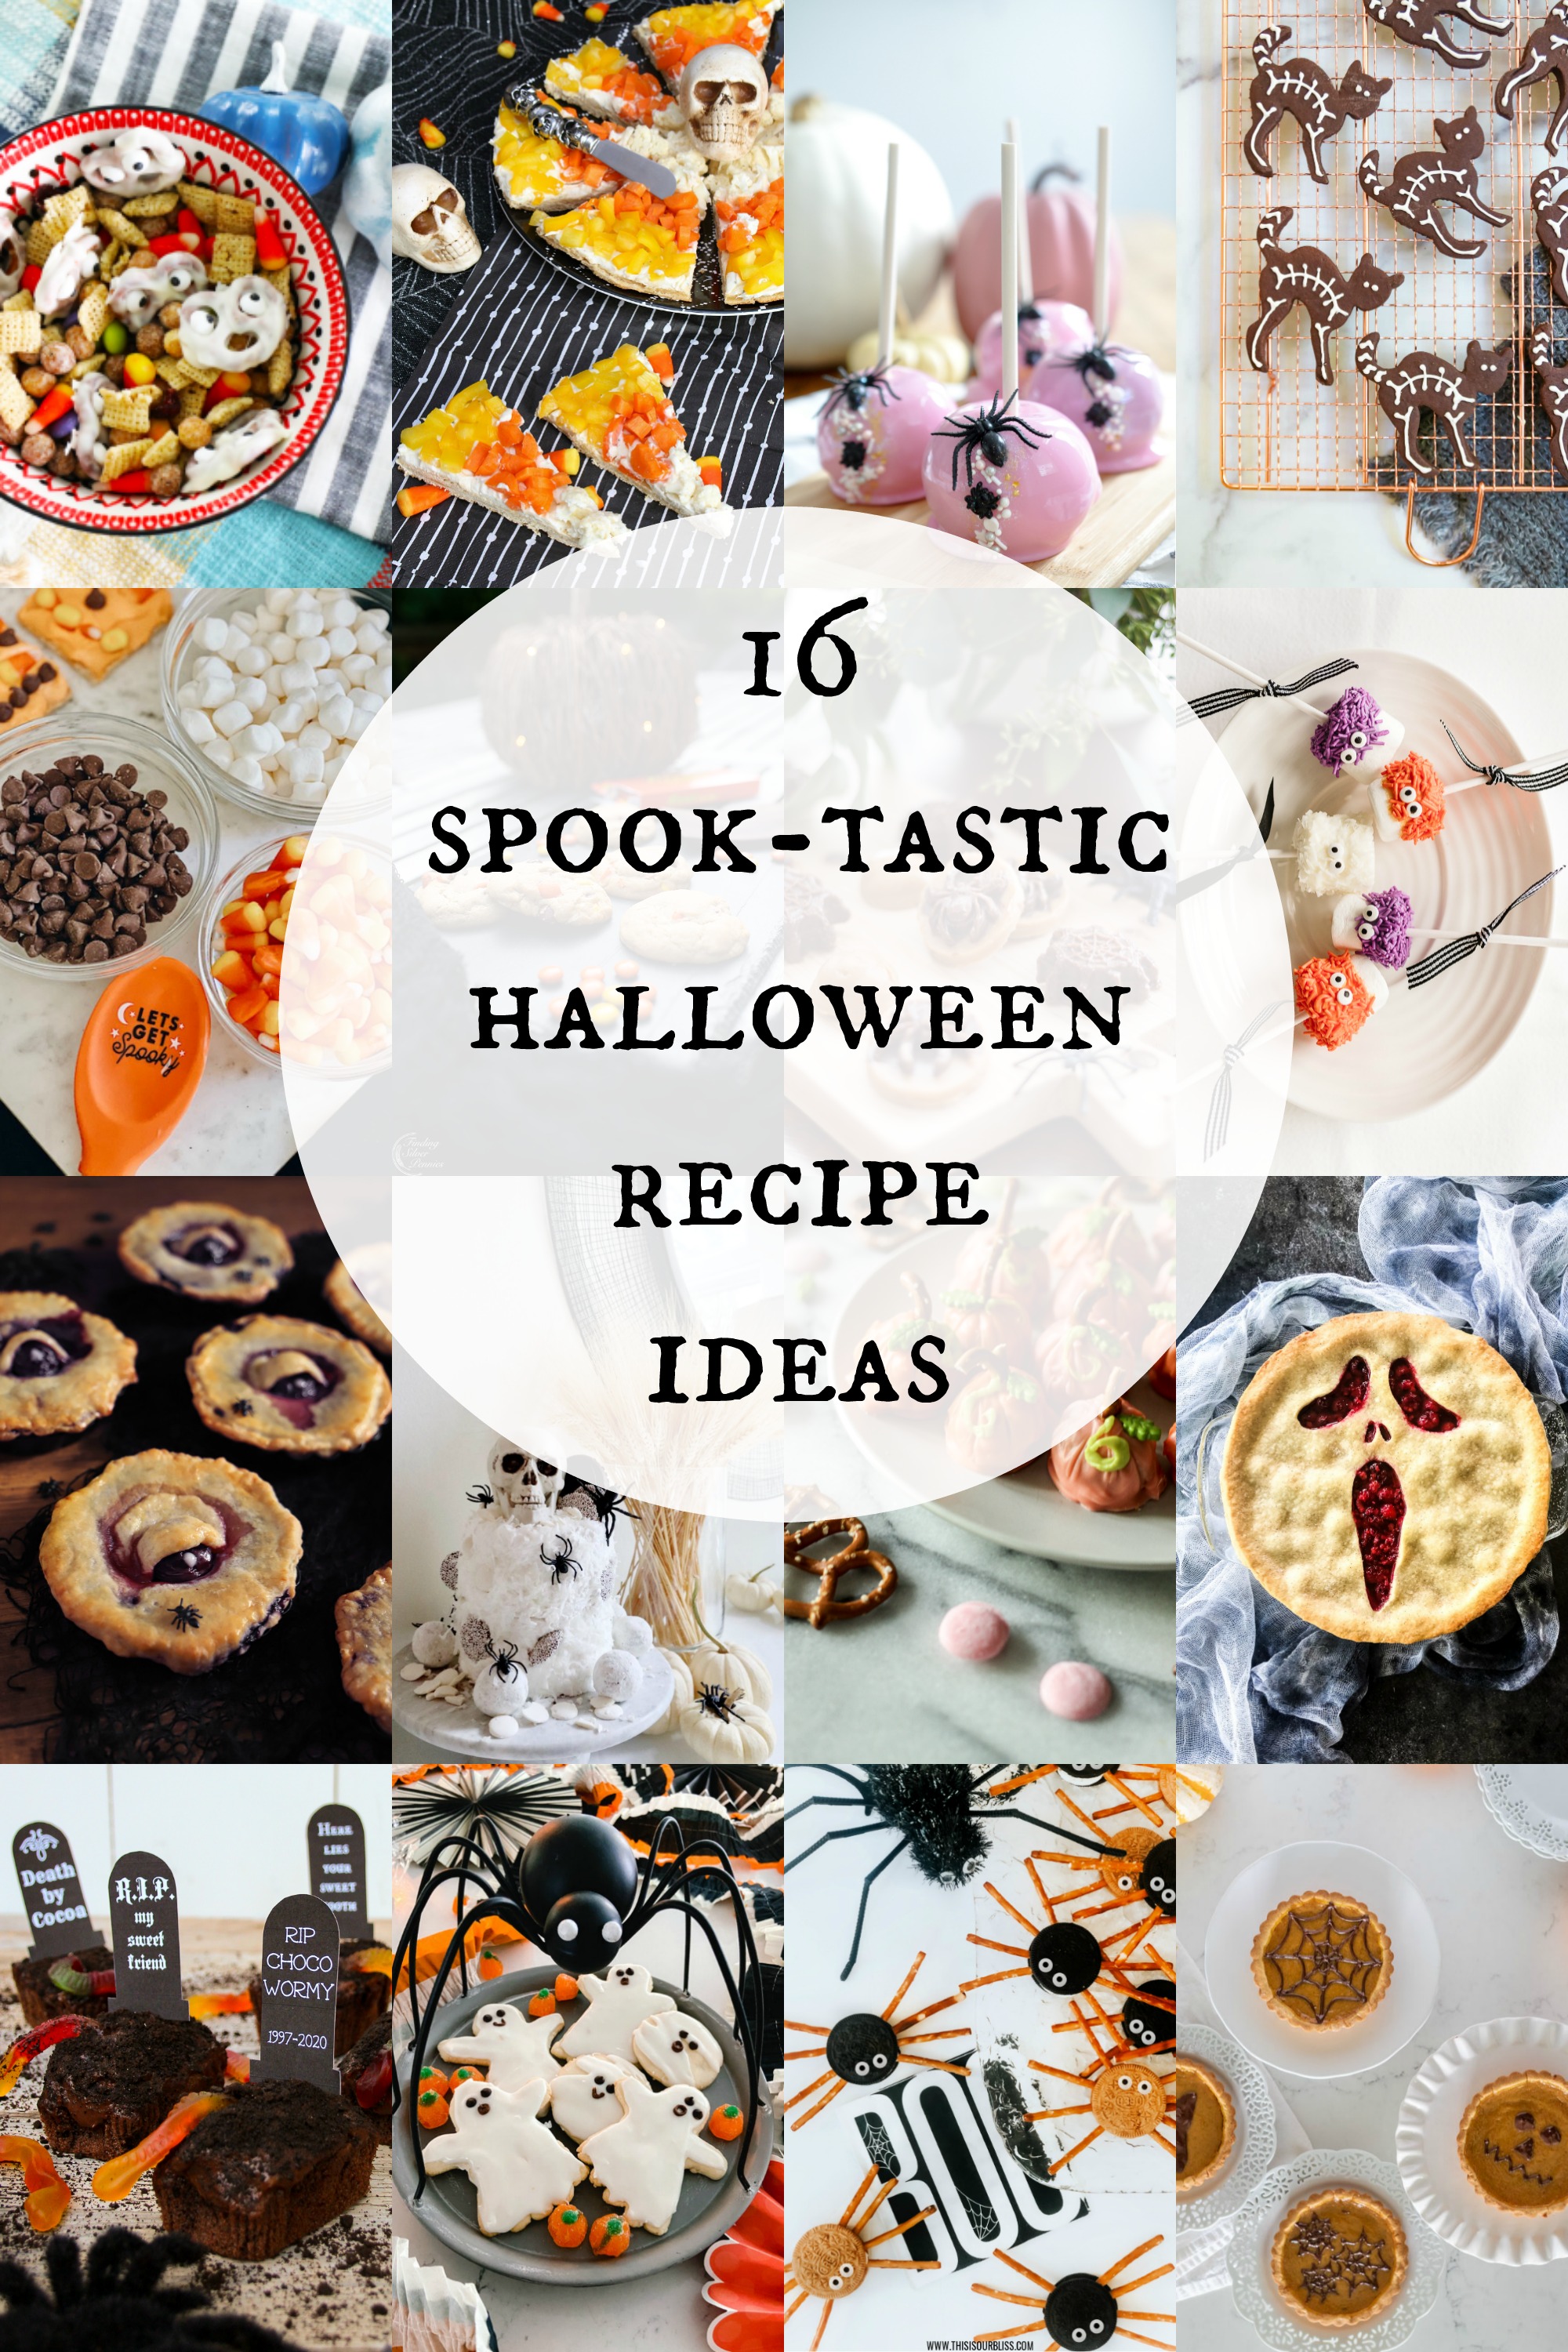 16 Spook-Tastic Halloween Recipe Ideas poster.